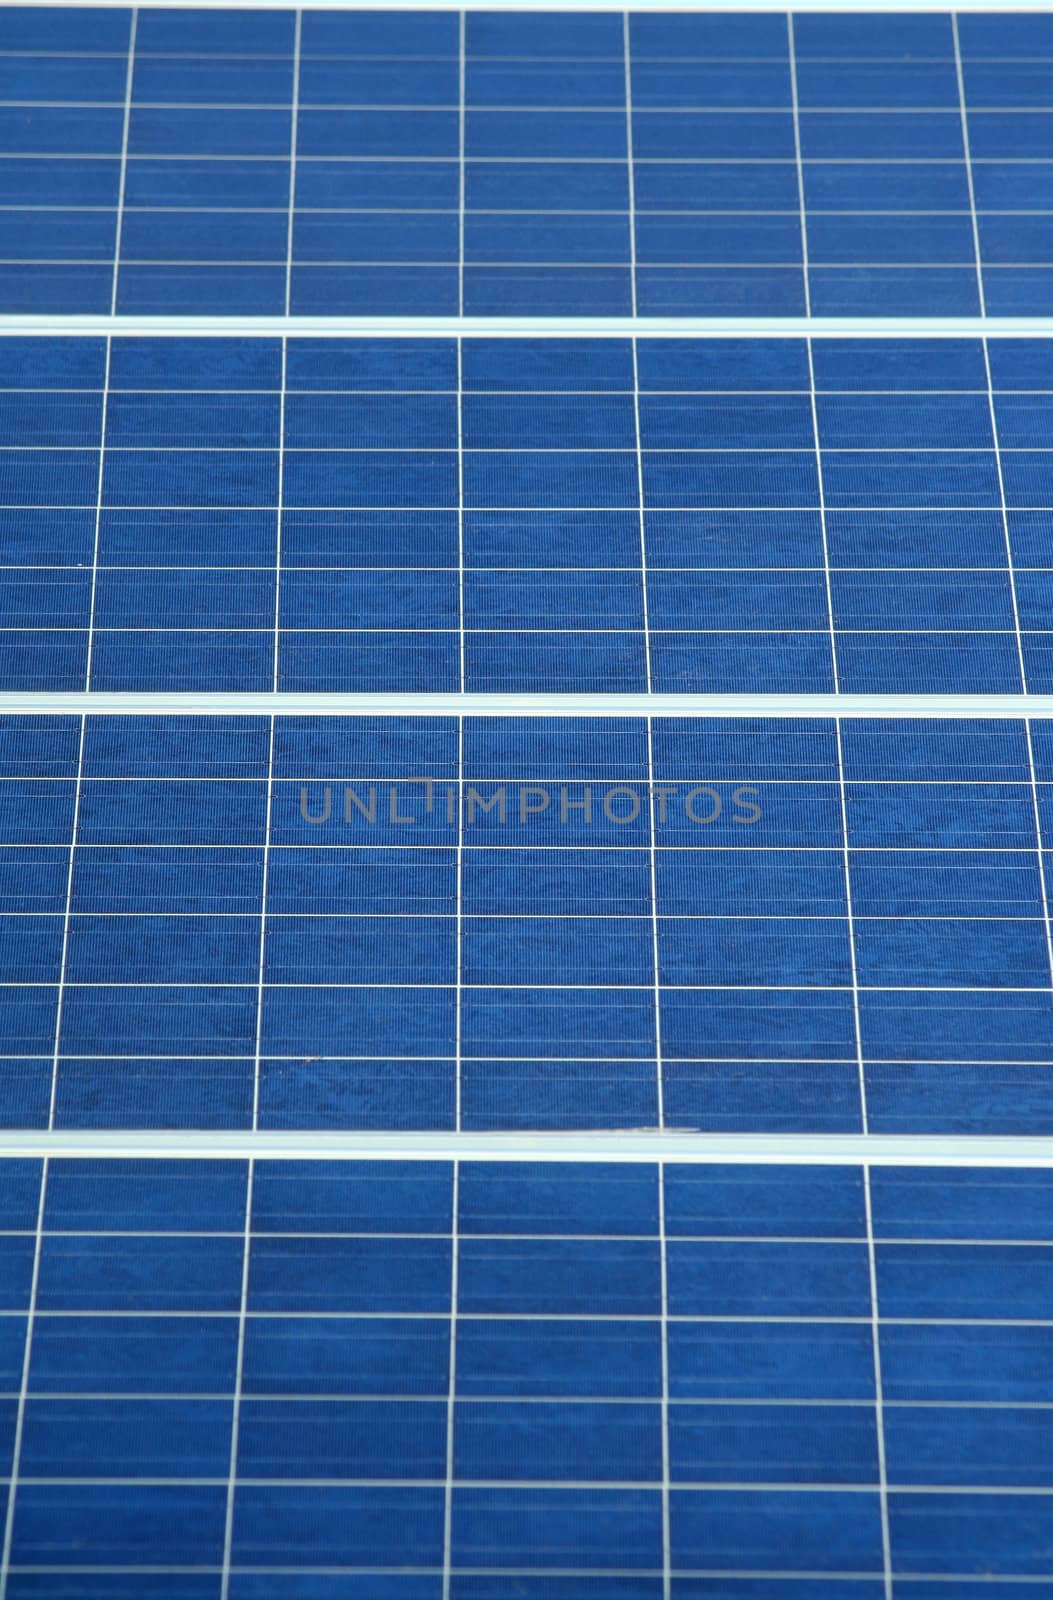 A close up of a solar panel